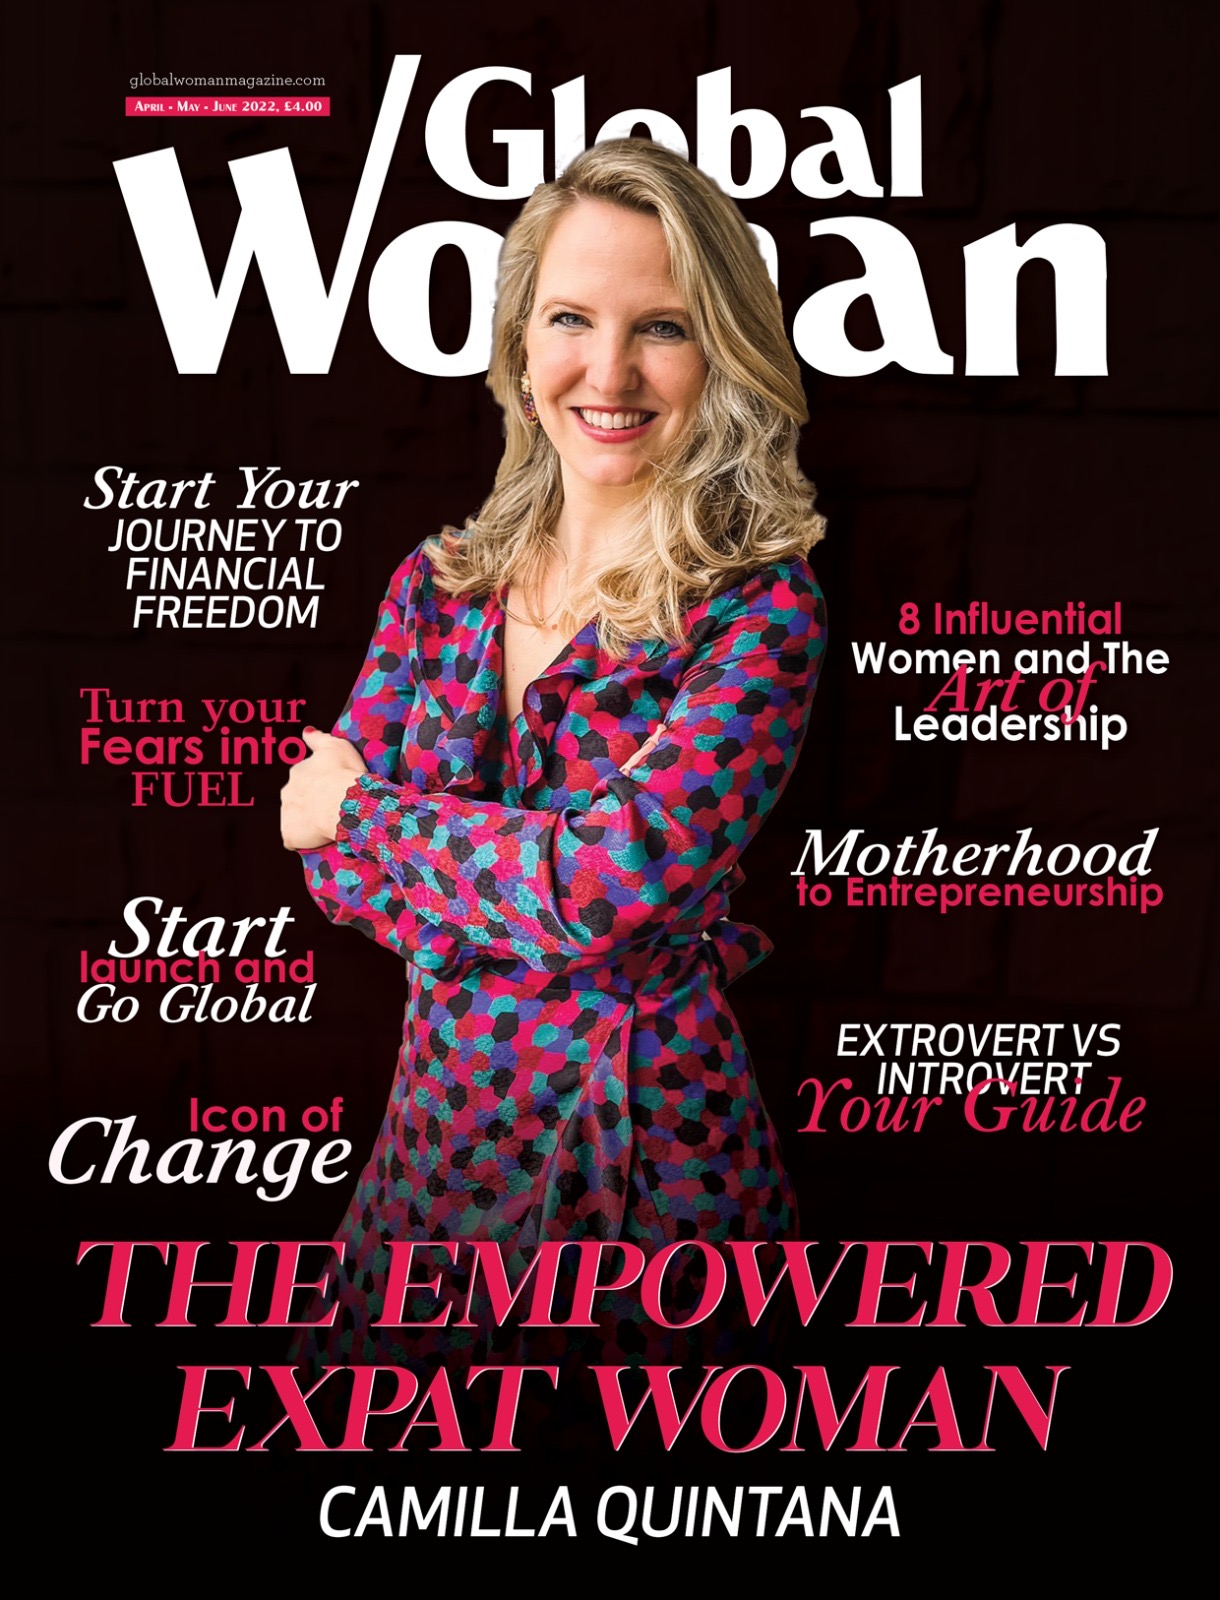 global woman magazine camilla quintana